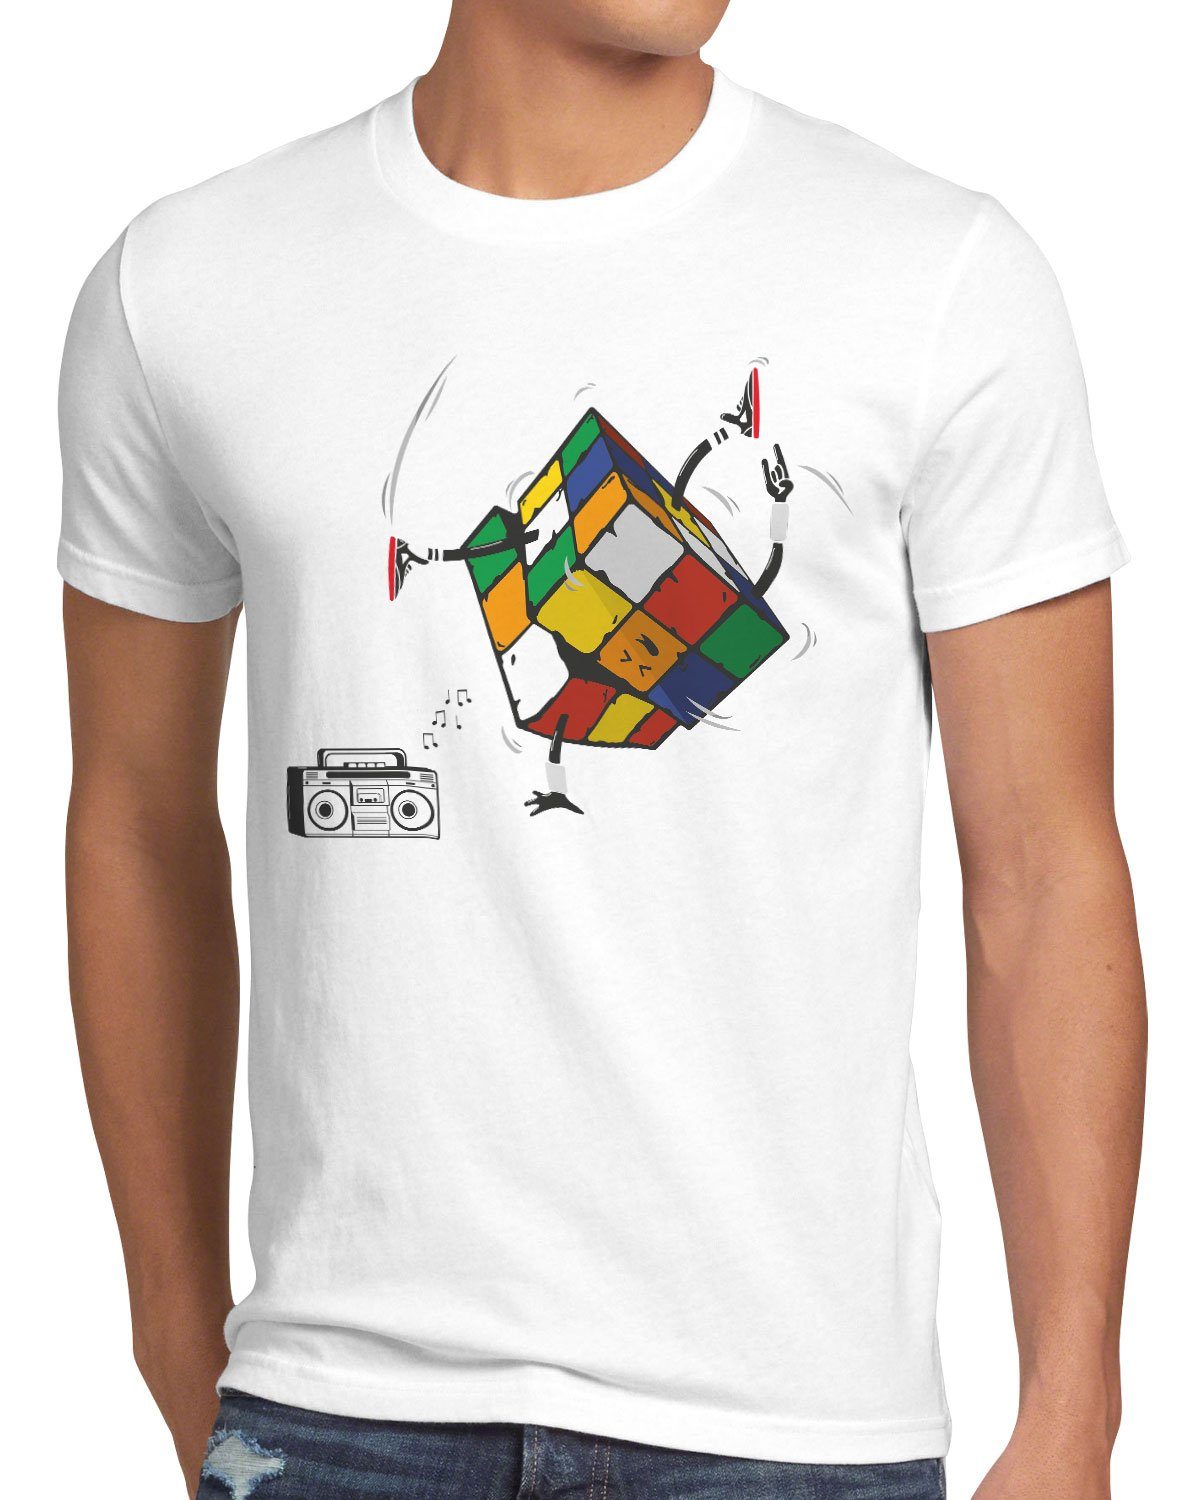 style3 Print-Shirt Herren Breakdance T-Shirt sheldon zauberwürfel Cube weiß